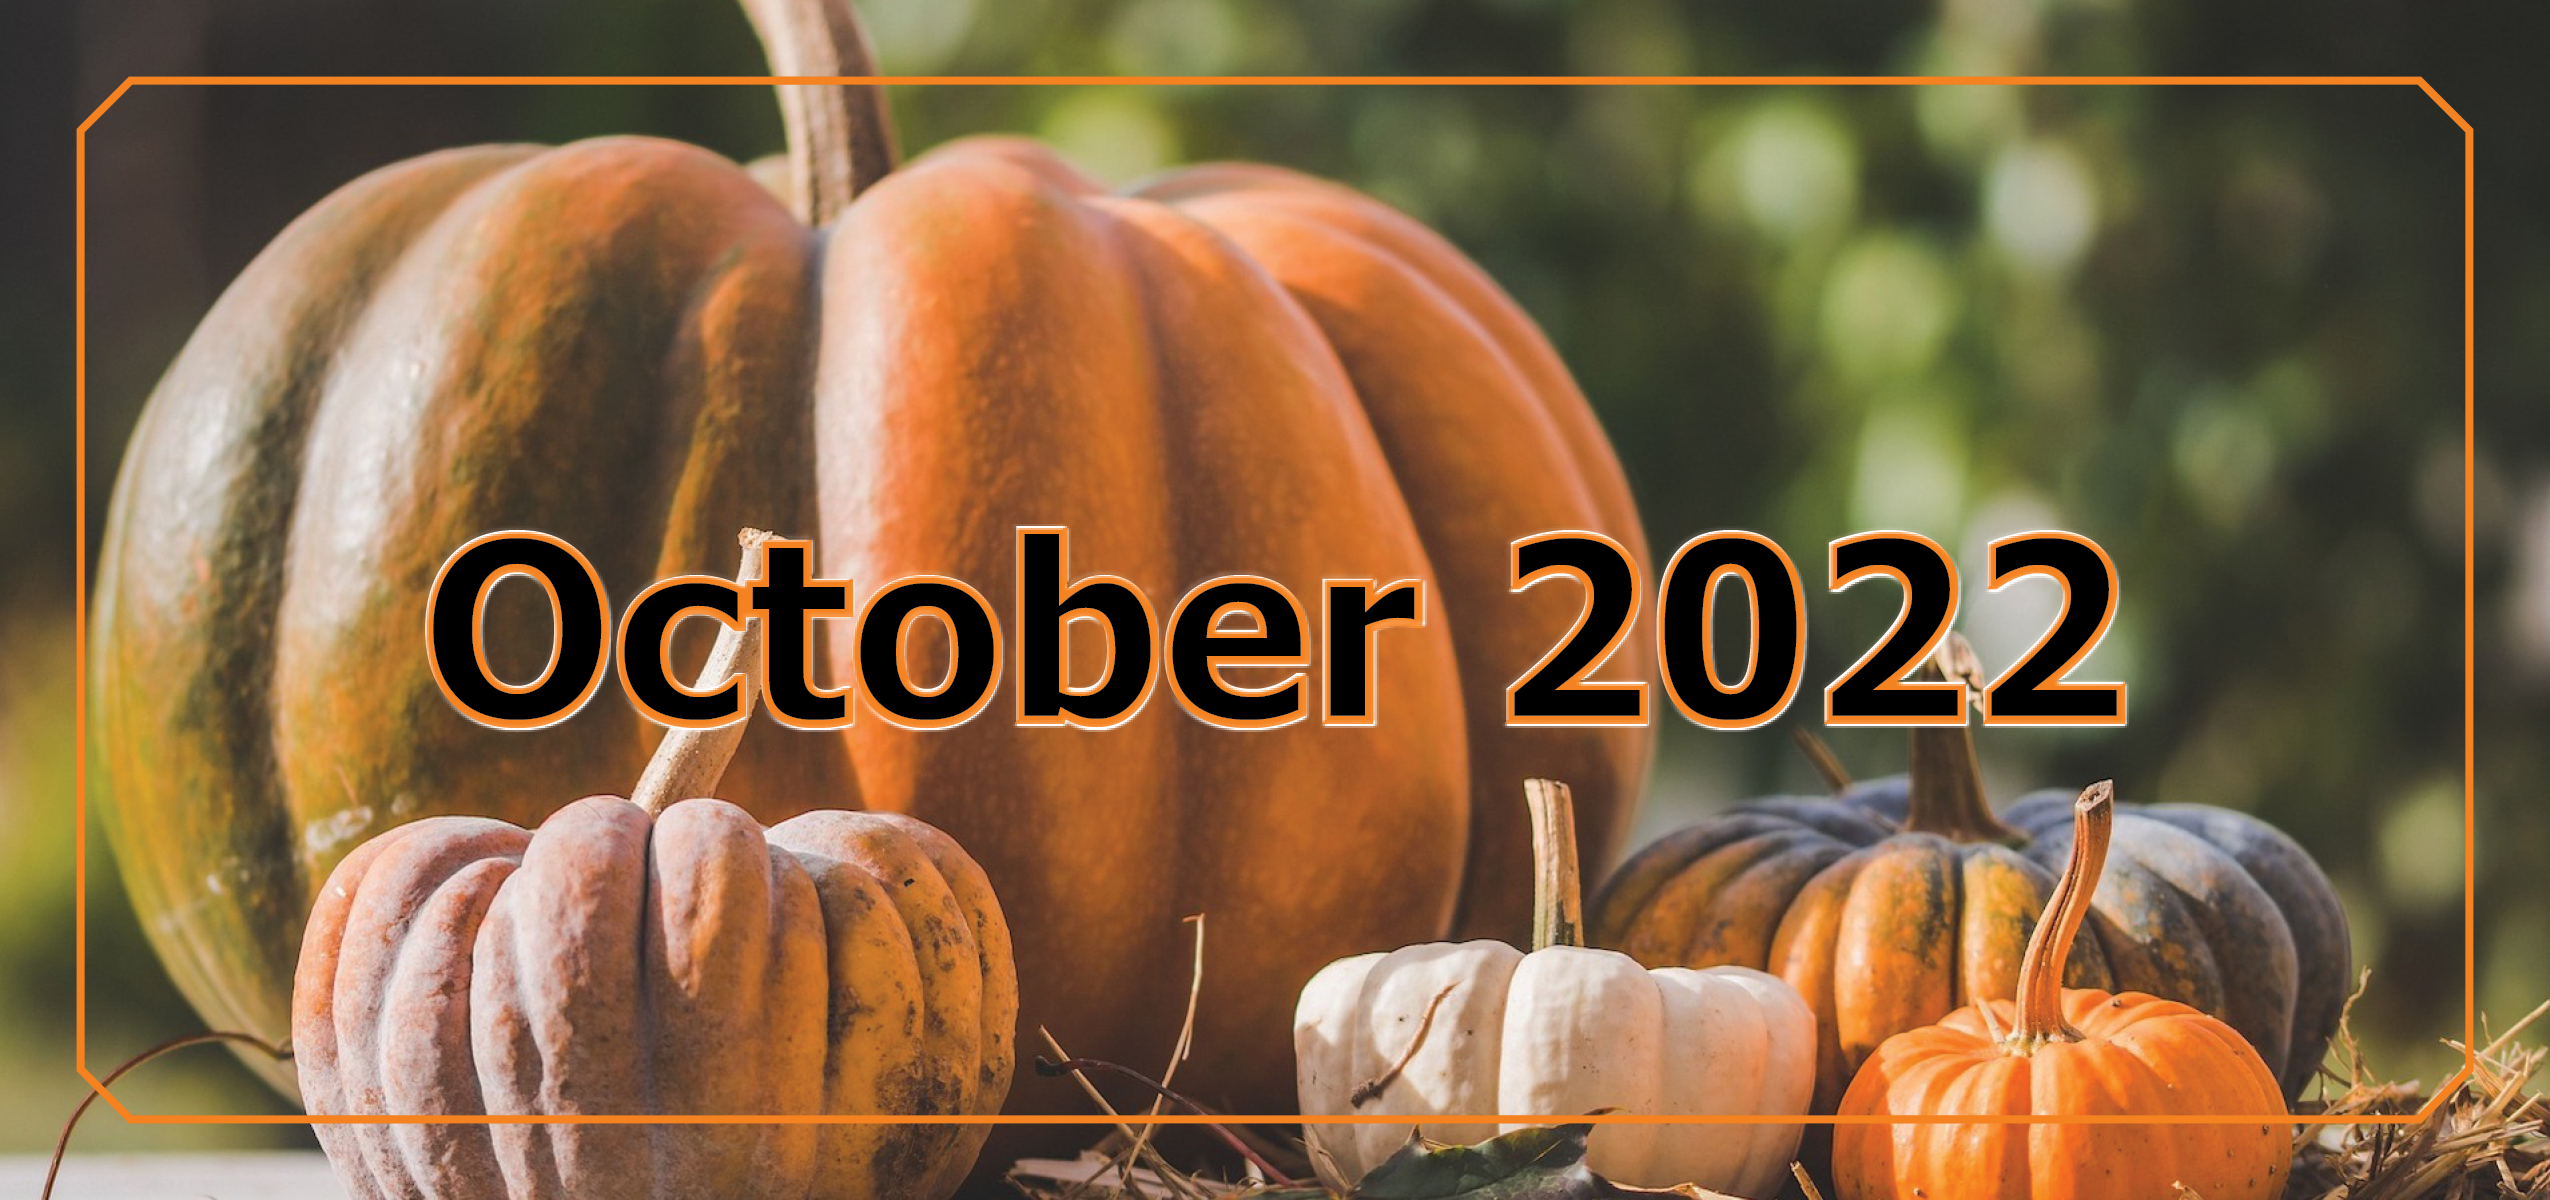  October 2022 on a pumpkin background